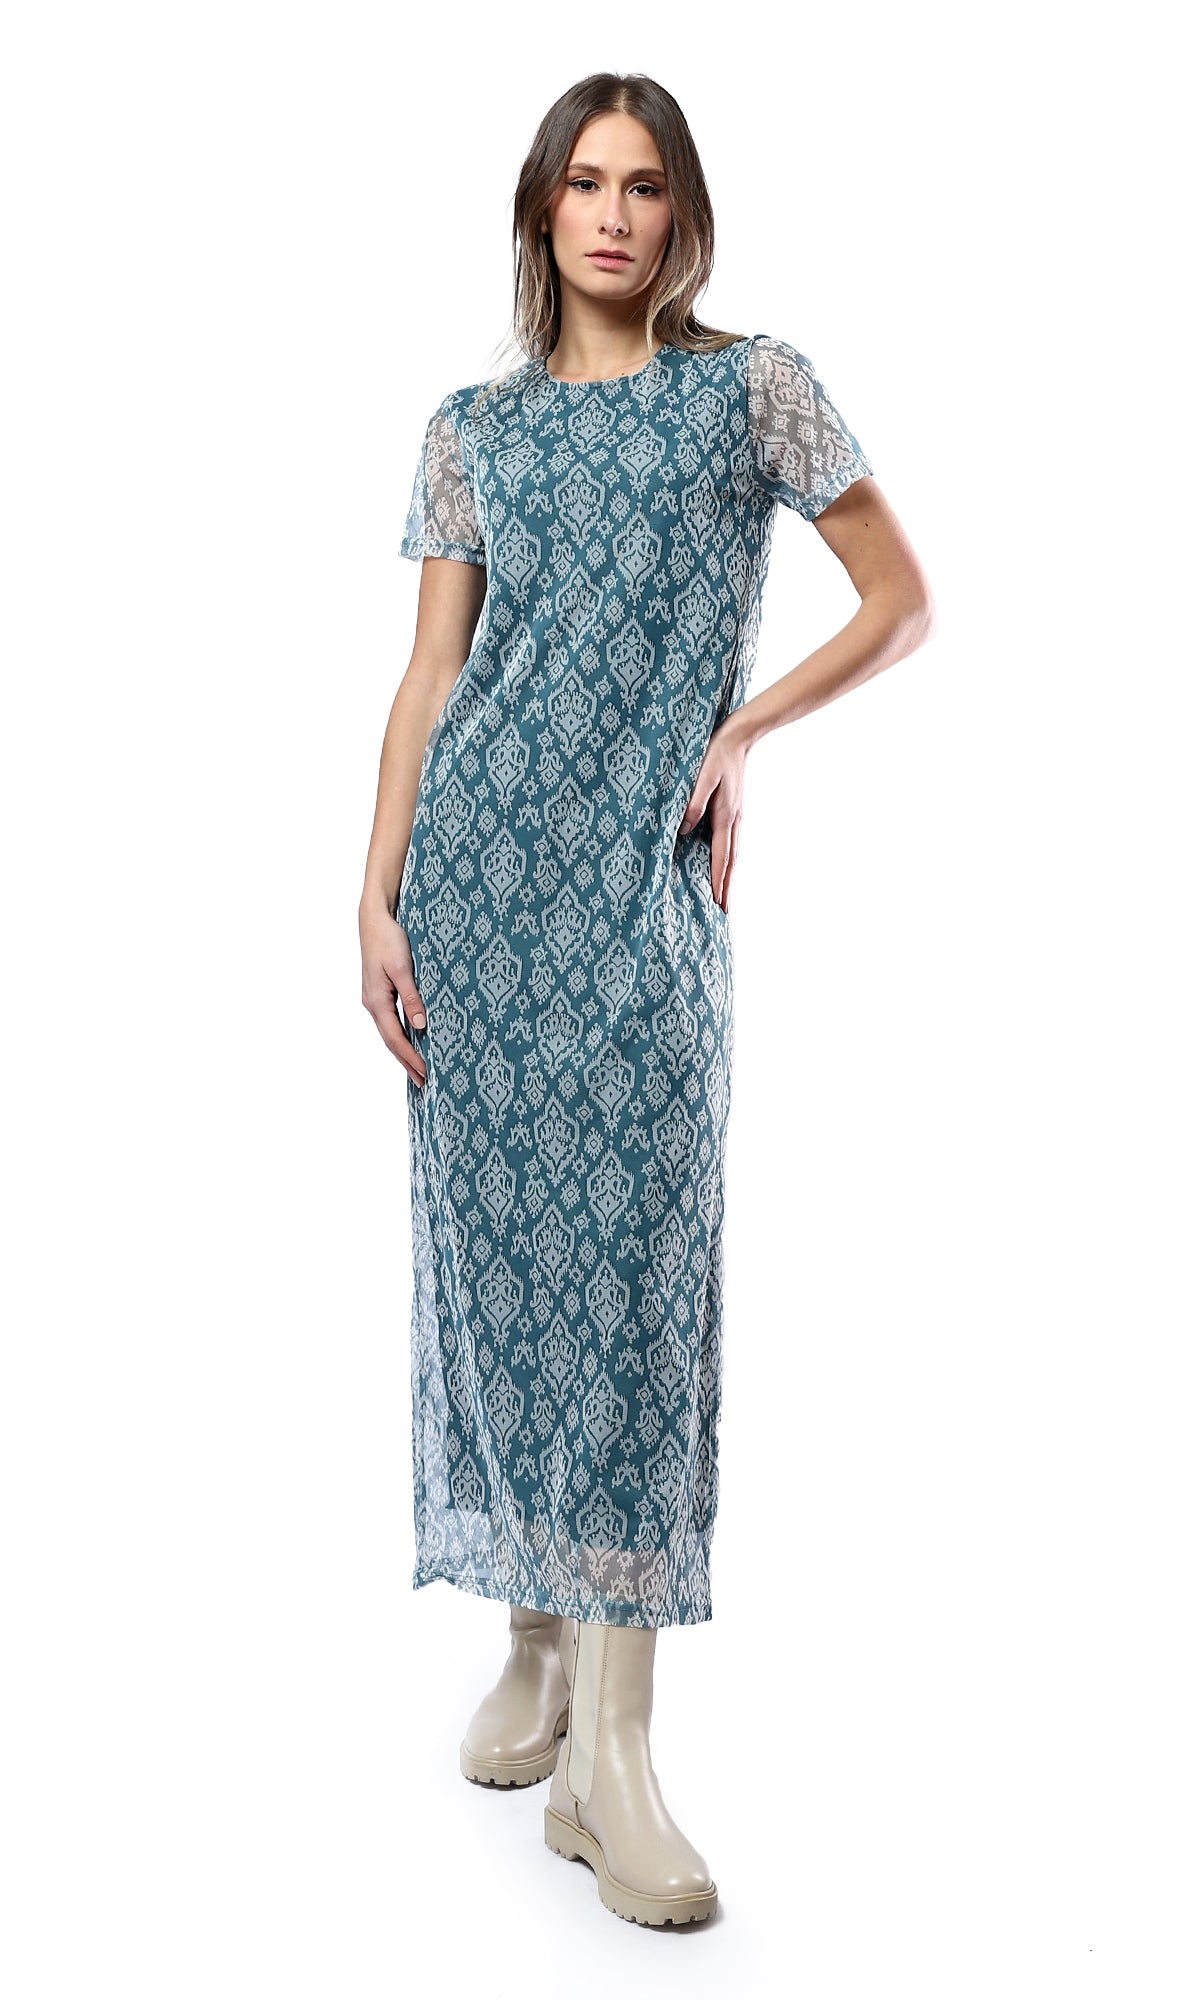 O178300 Patterned Short Sleeves Sea Green & White Dress